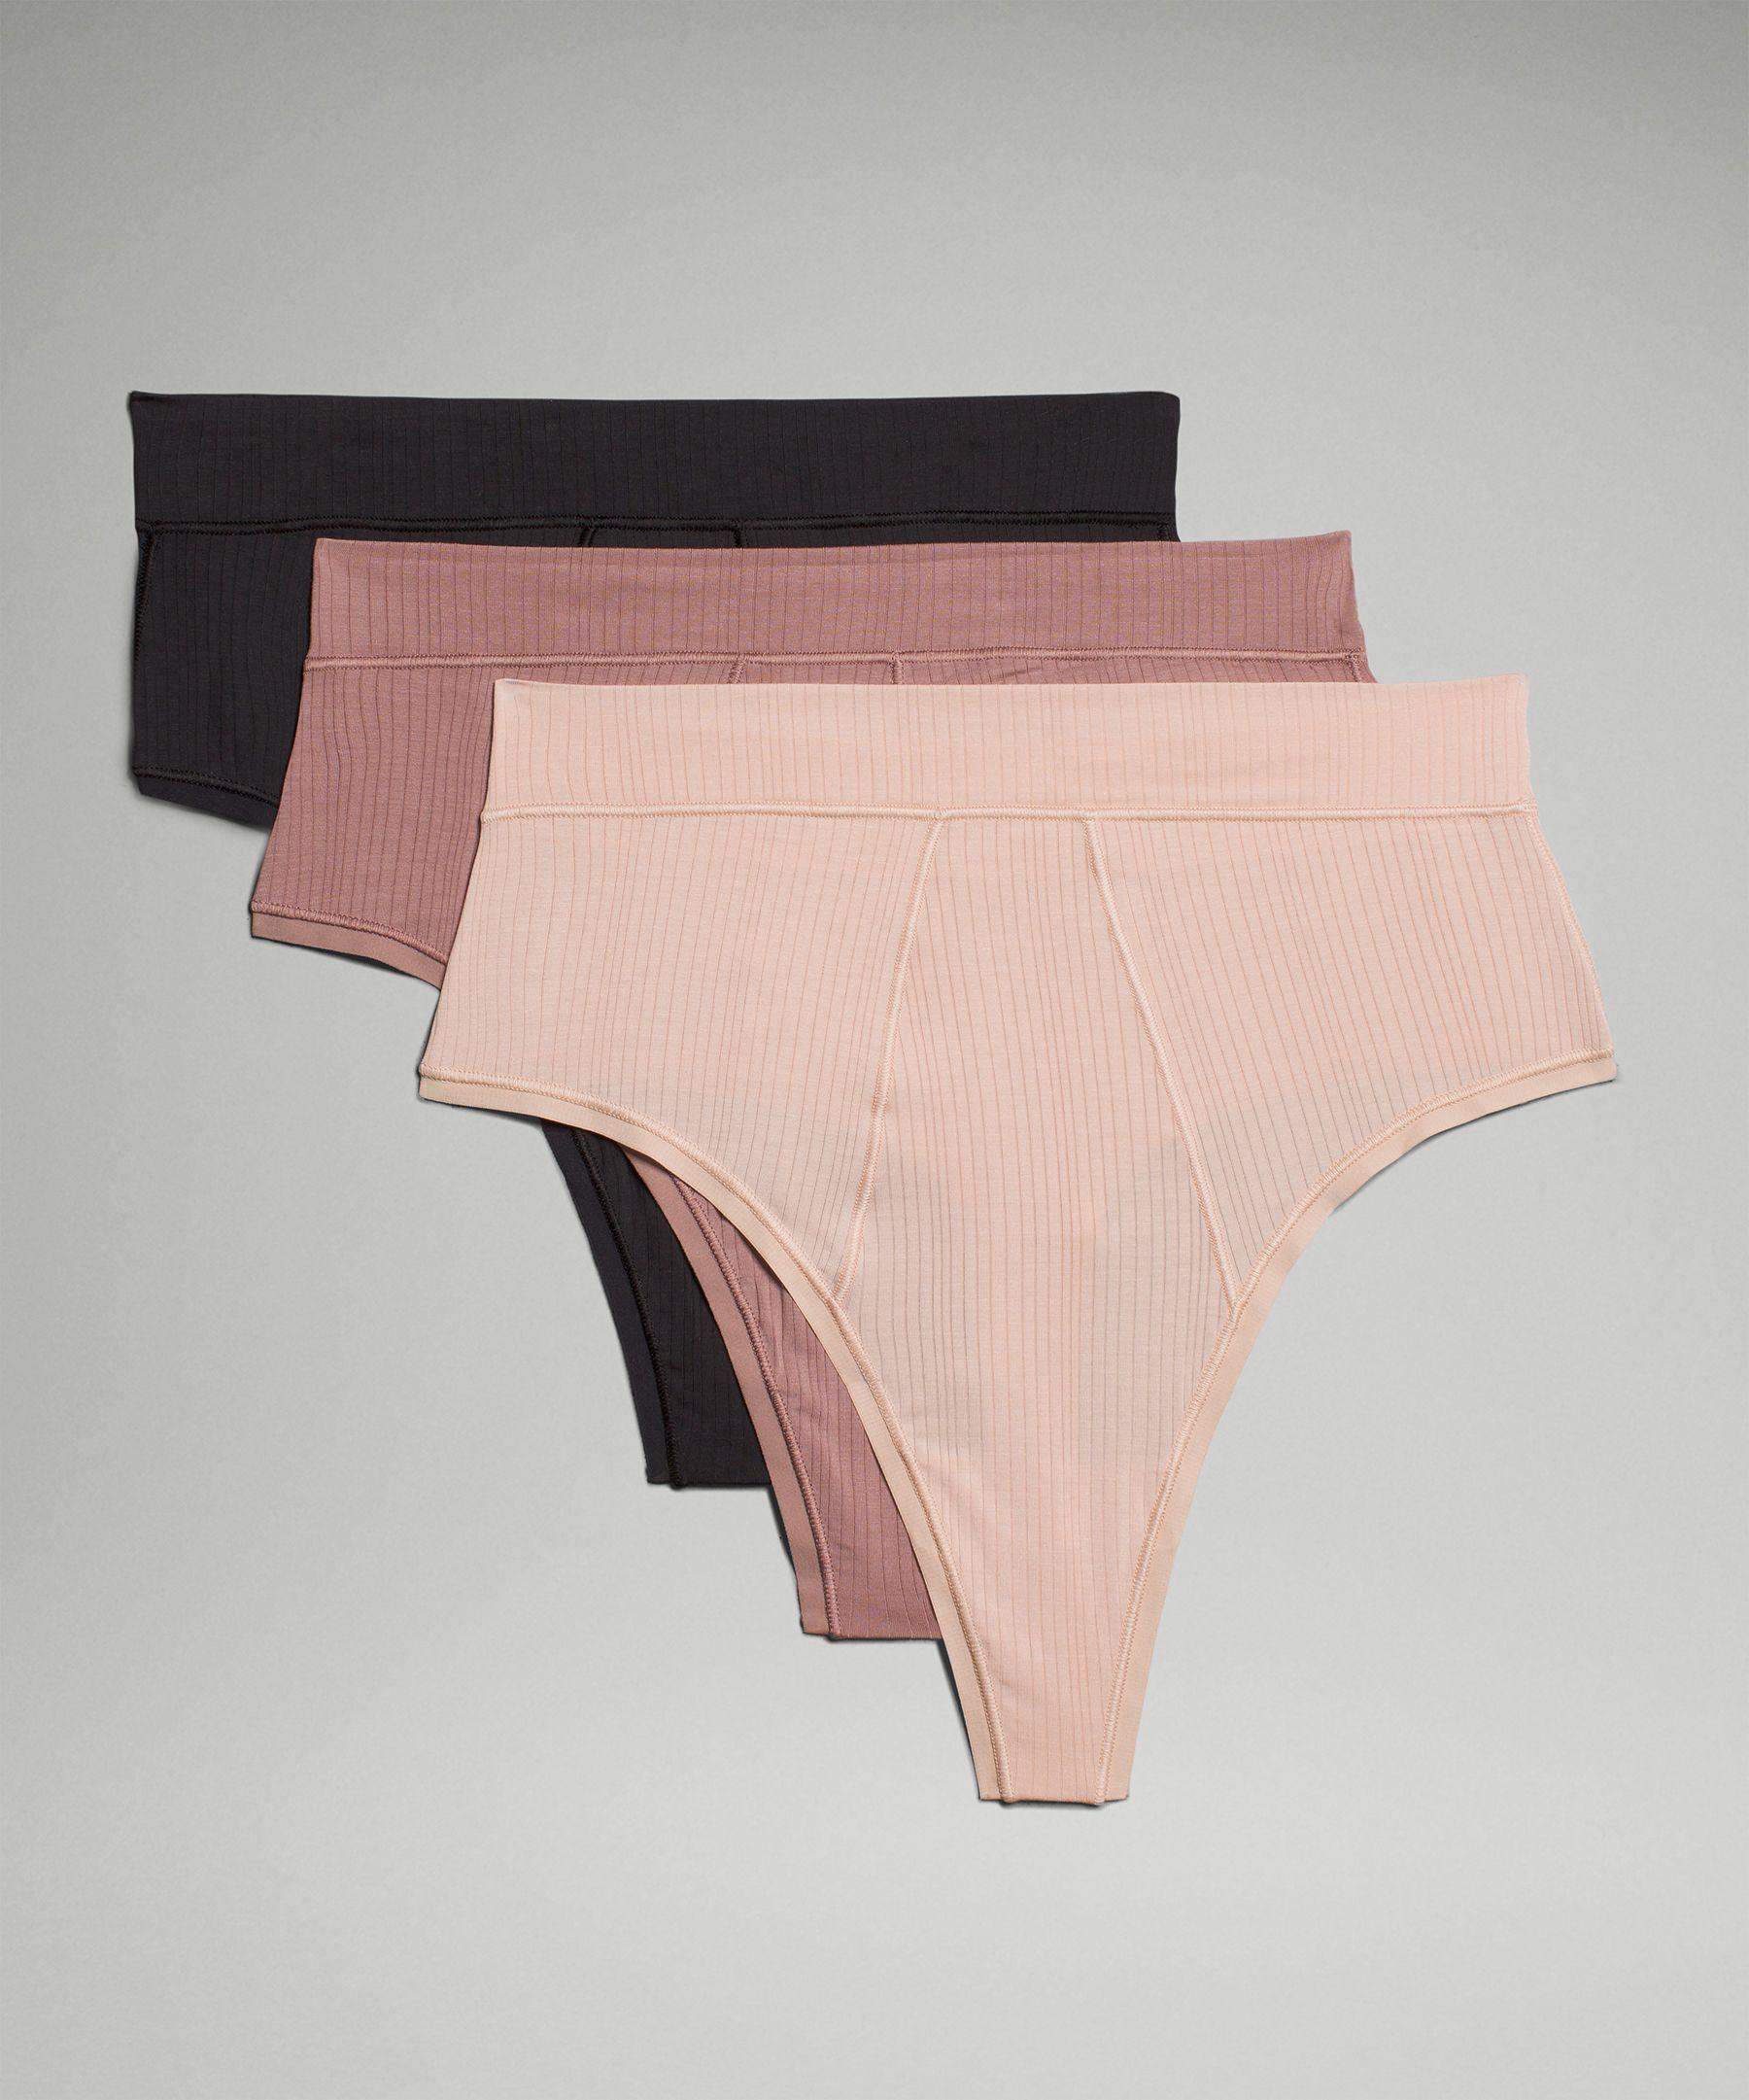 Lululemon athletica Wundermost Ultra-Soft Nulu Dipped-Waist Thong Underwear, Women's